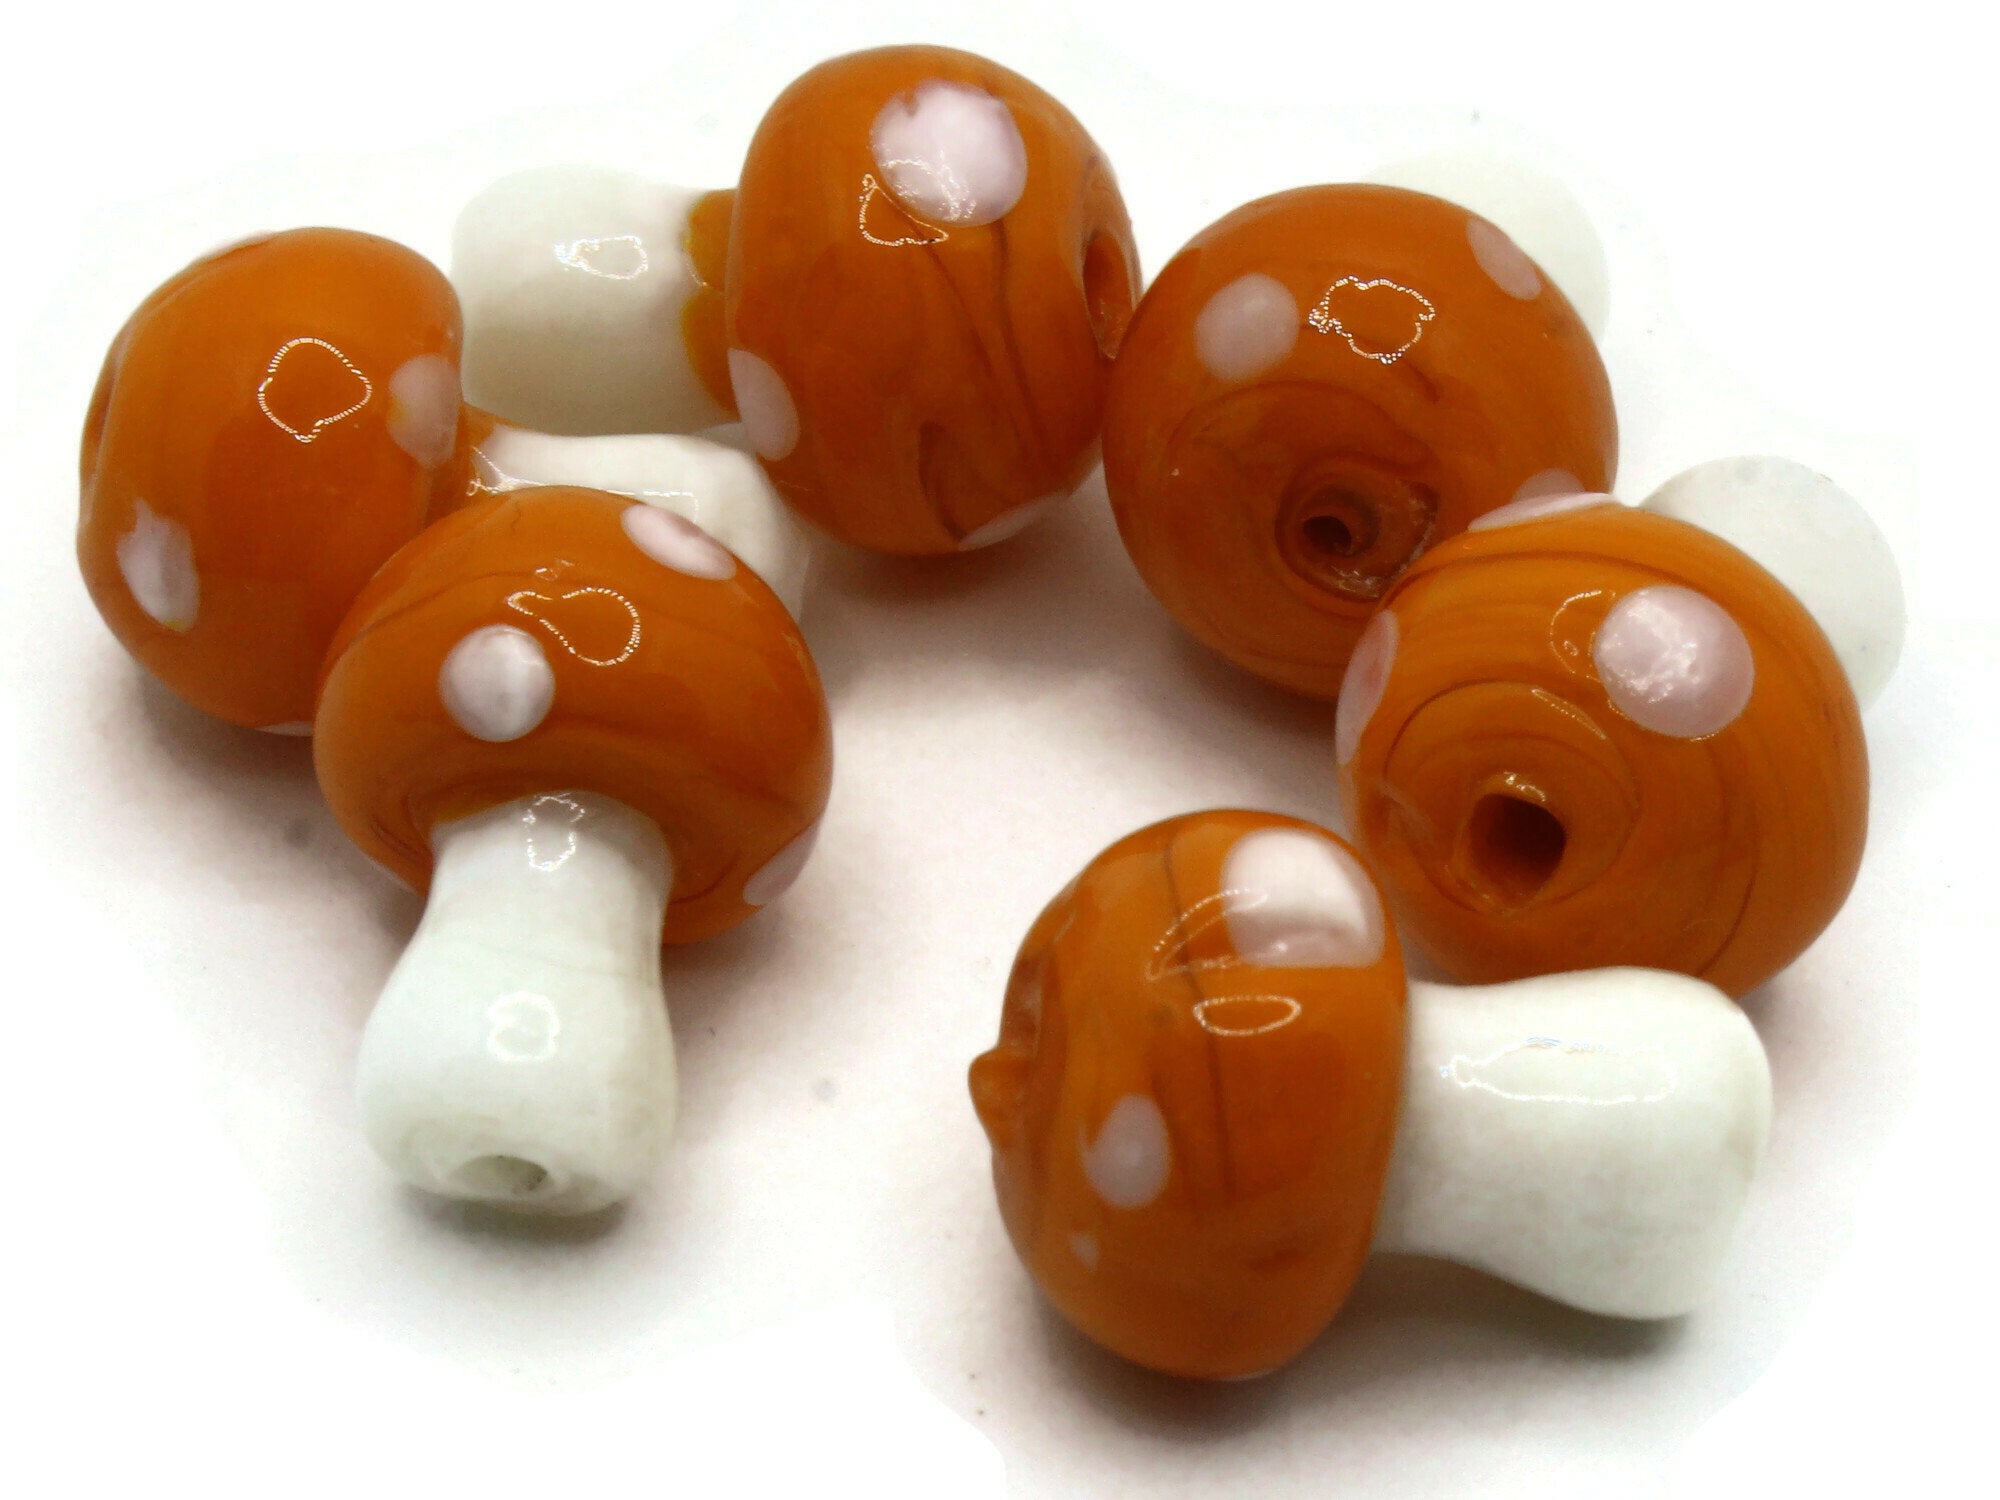 6 19mm Orange and White Mushroom Polka Dot Lampwork Glass Beads by Smileyboy Beads | Michaels